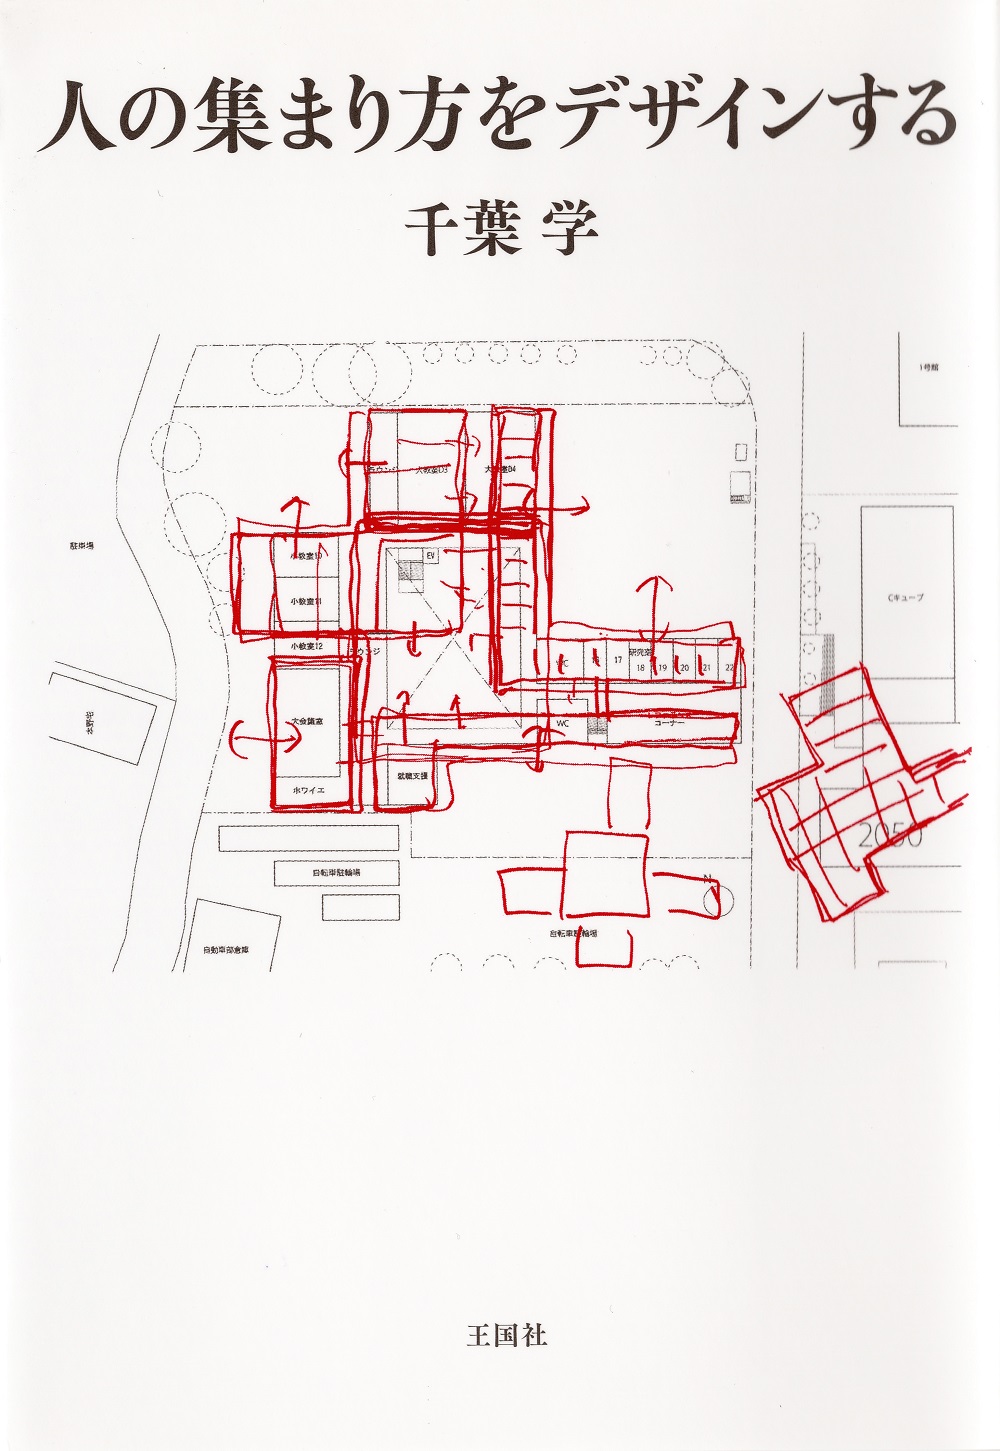 A floor plan of facility